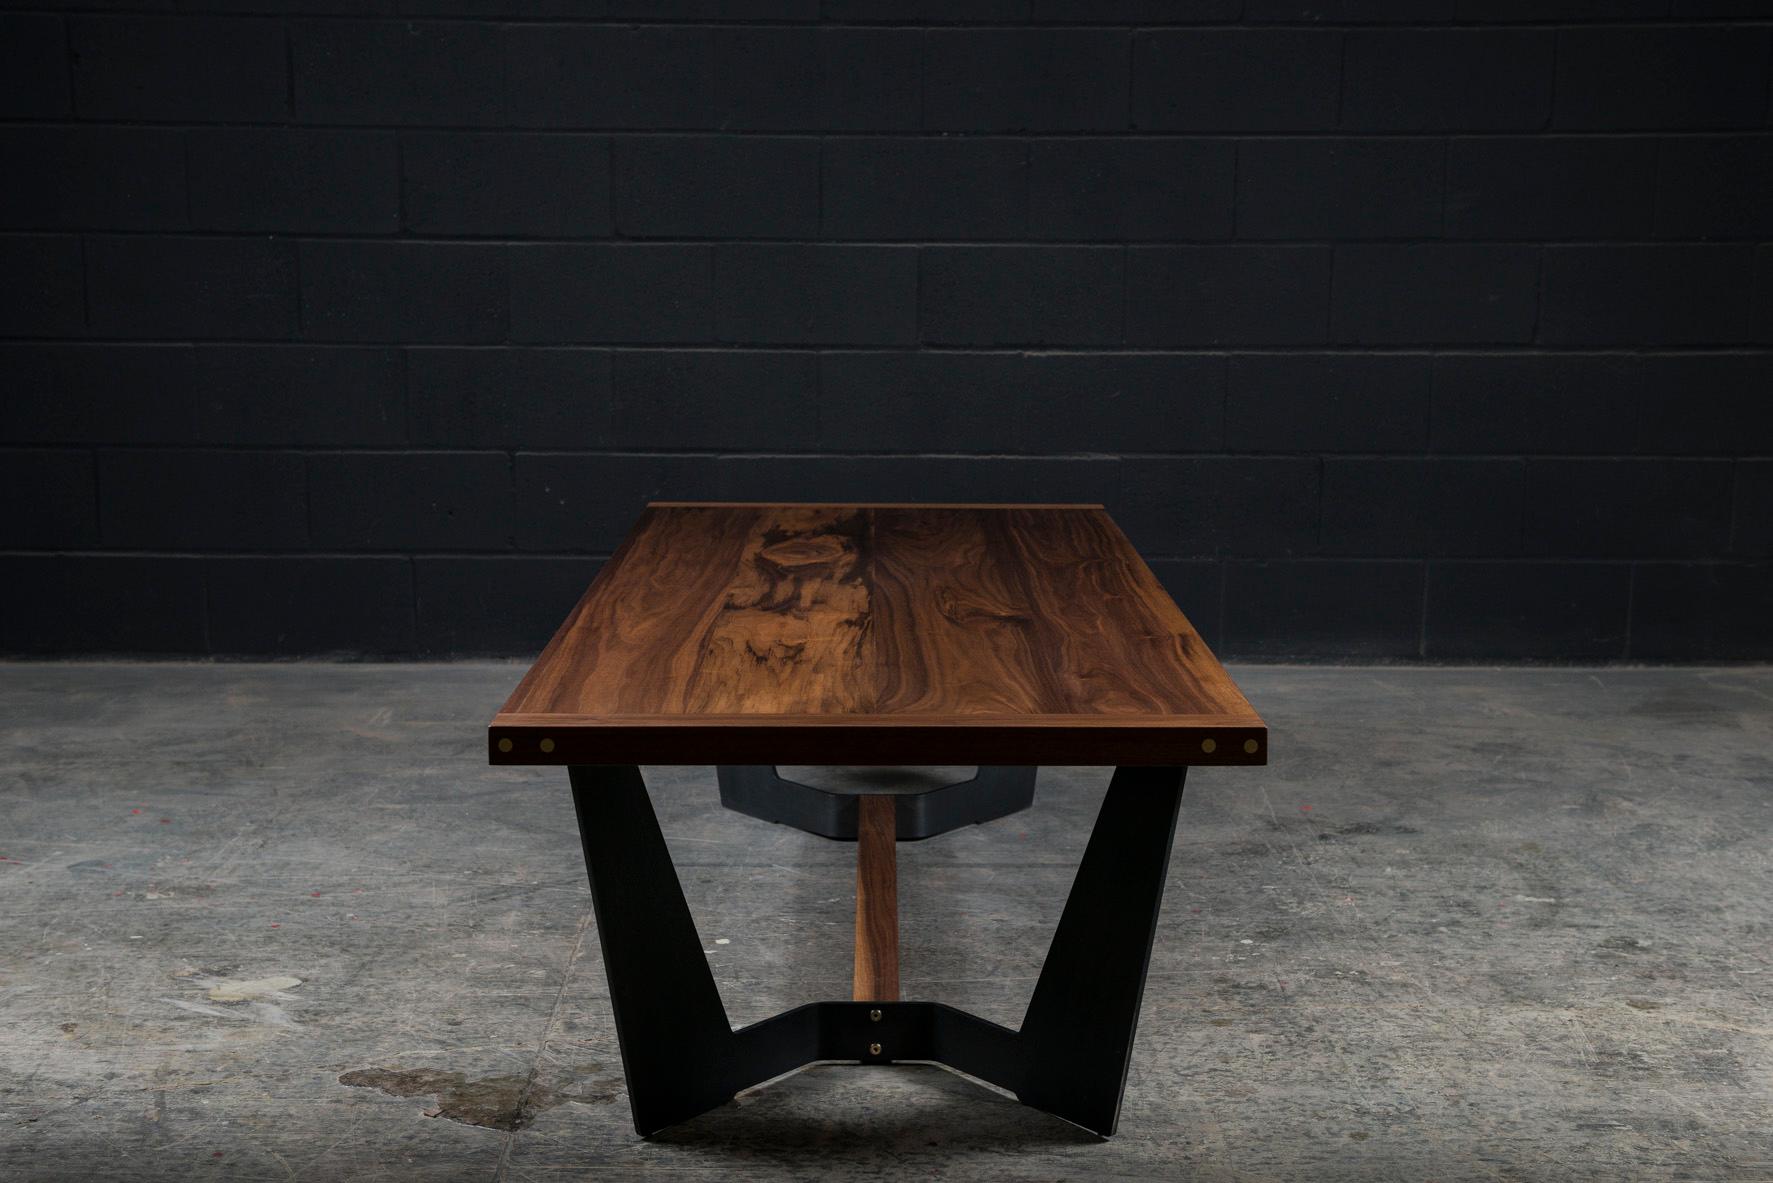 Modern Franklin Coffee Table by Ambrozia, Solid Walnut, Blackened Steel & Brass Details